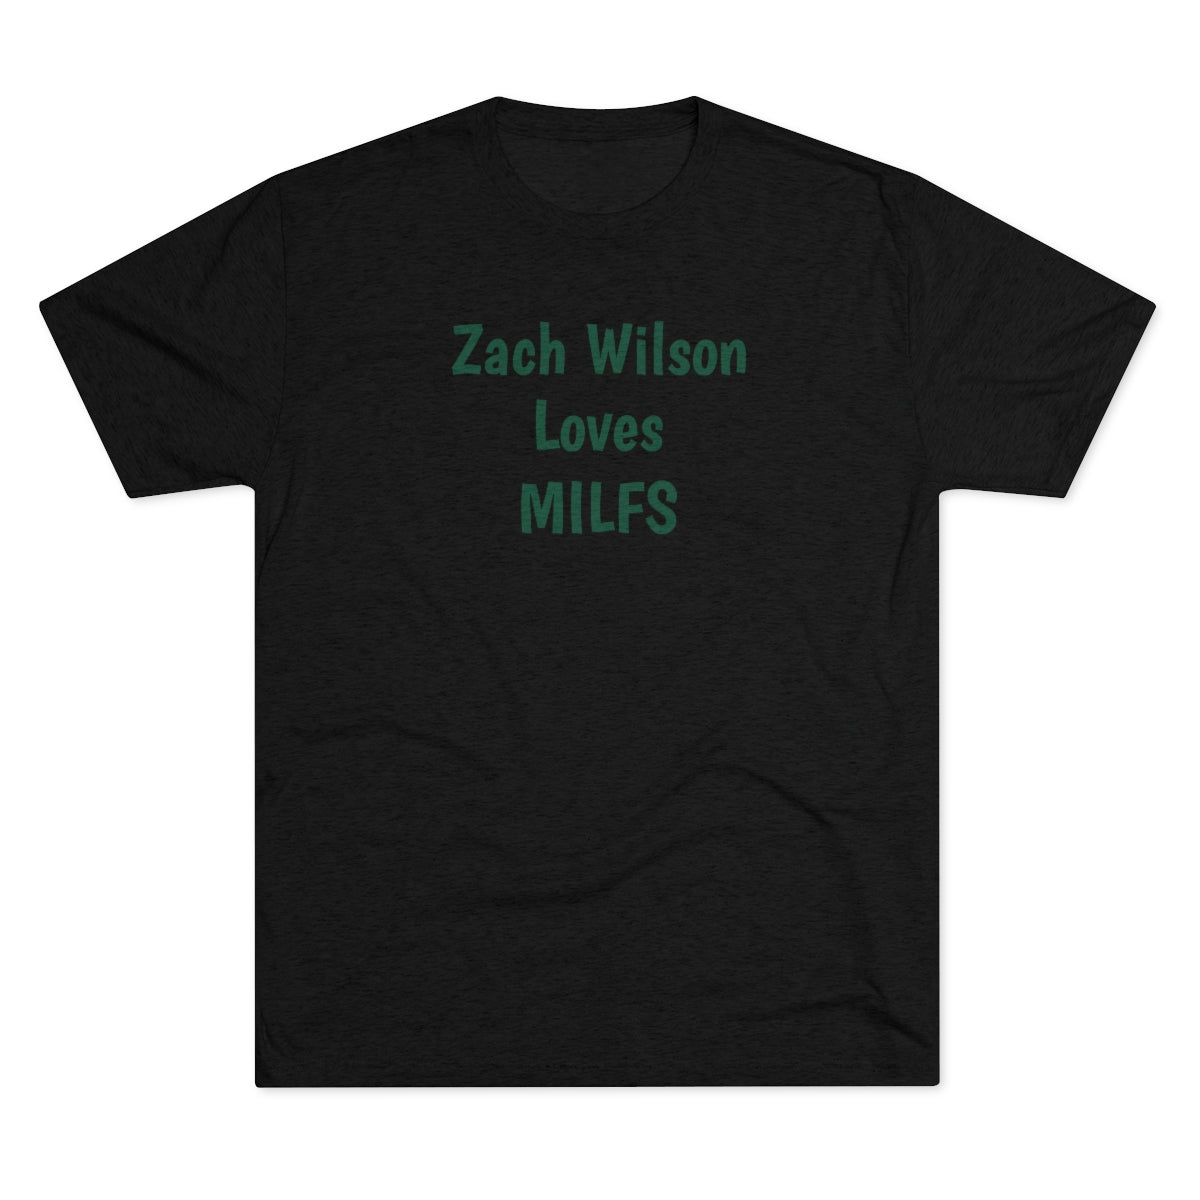 Zach Wilson MILFS T-Shirt - IsGoodBrand